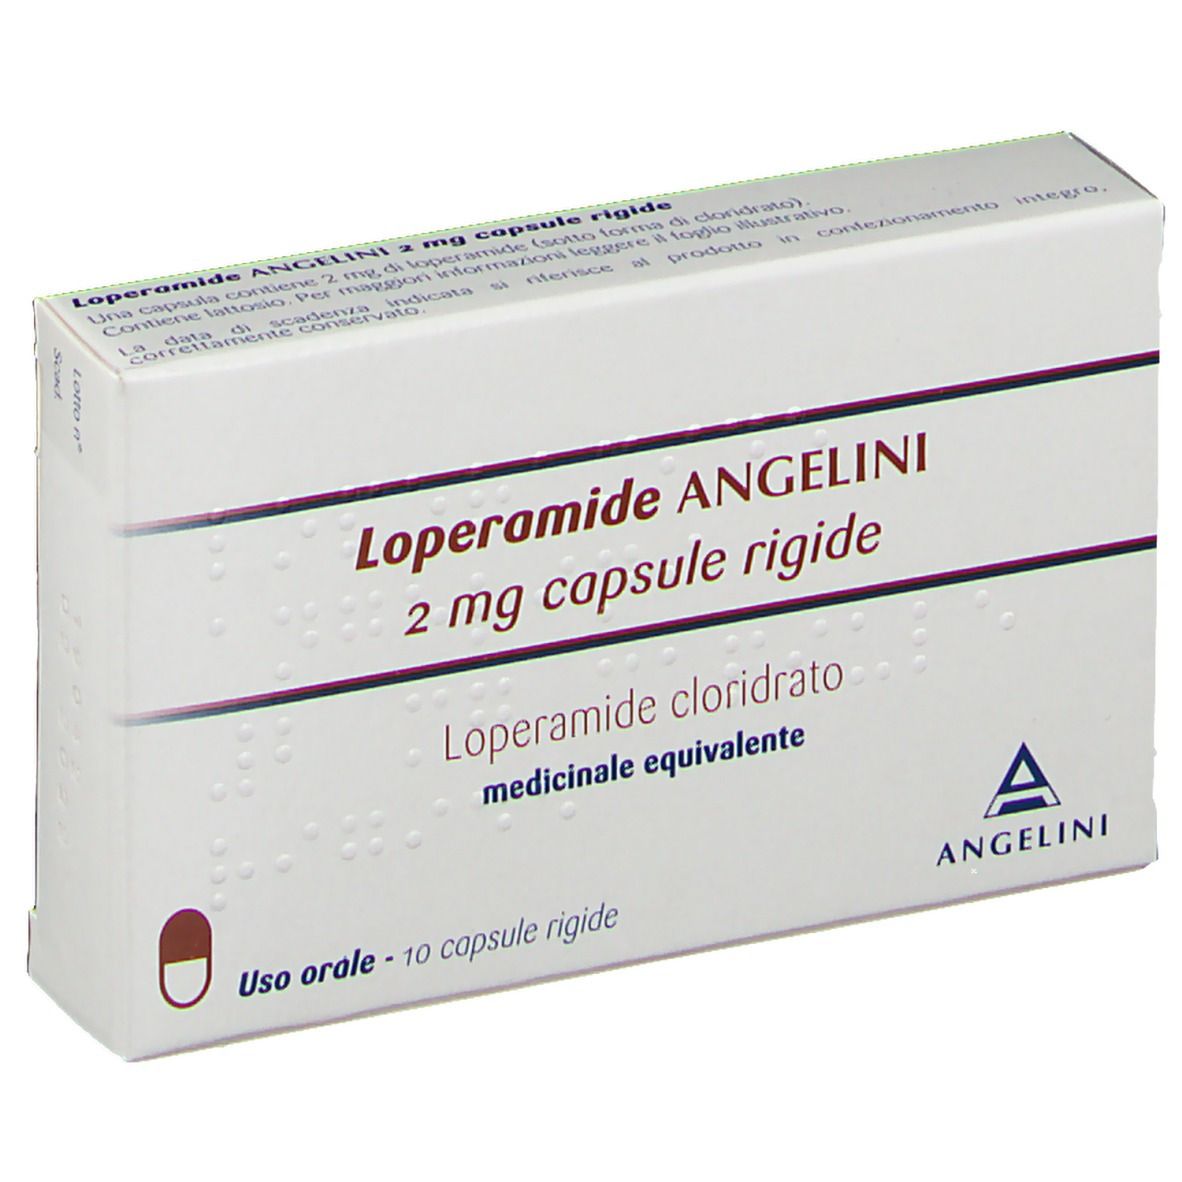 Loperamide Angelini 2 mg Capsule rigide